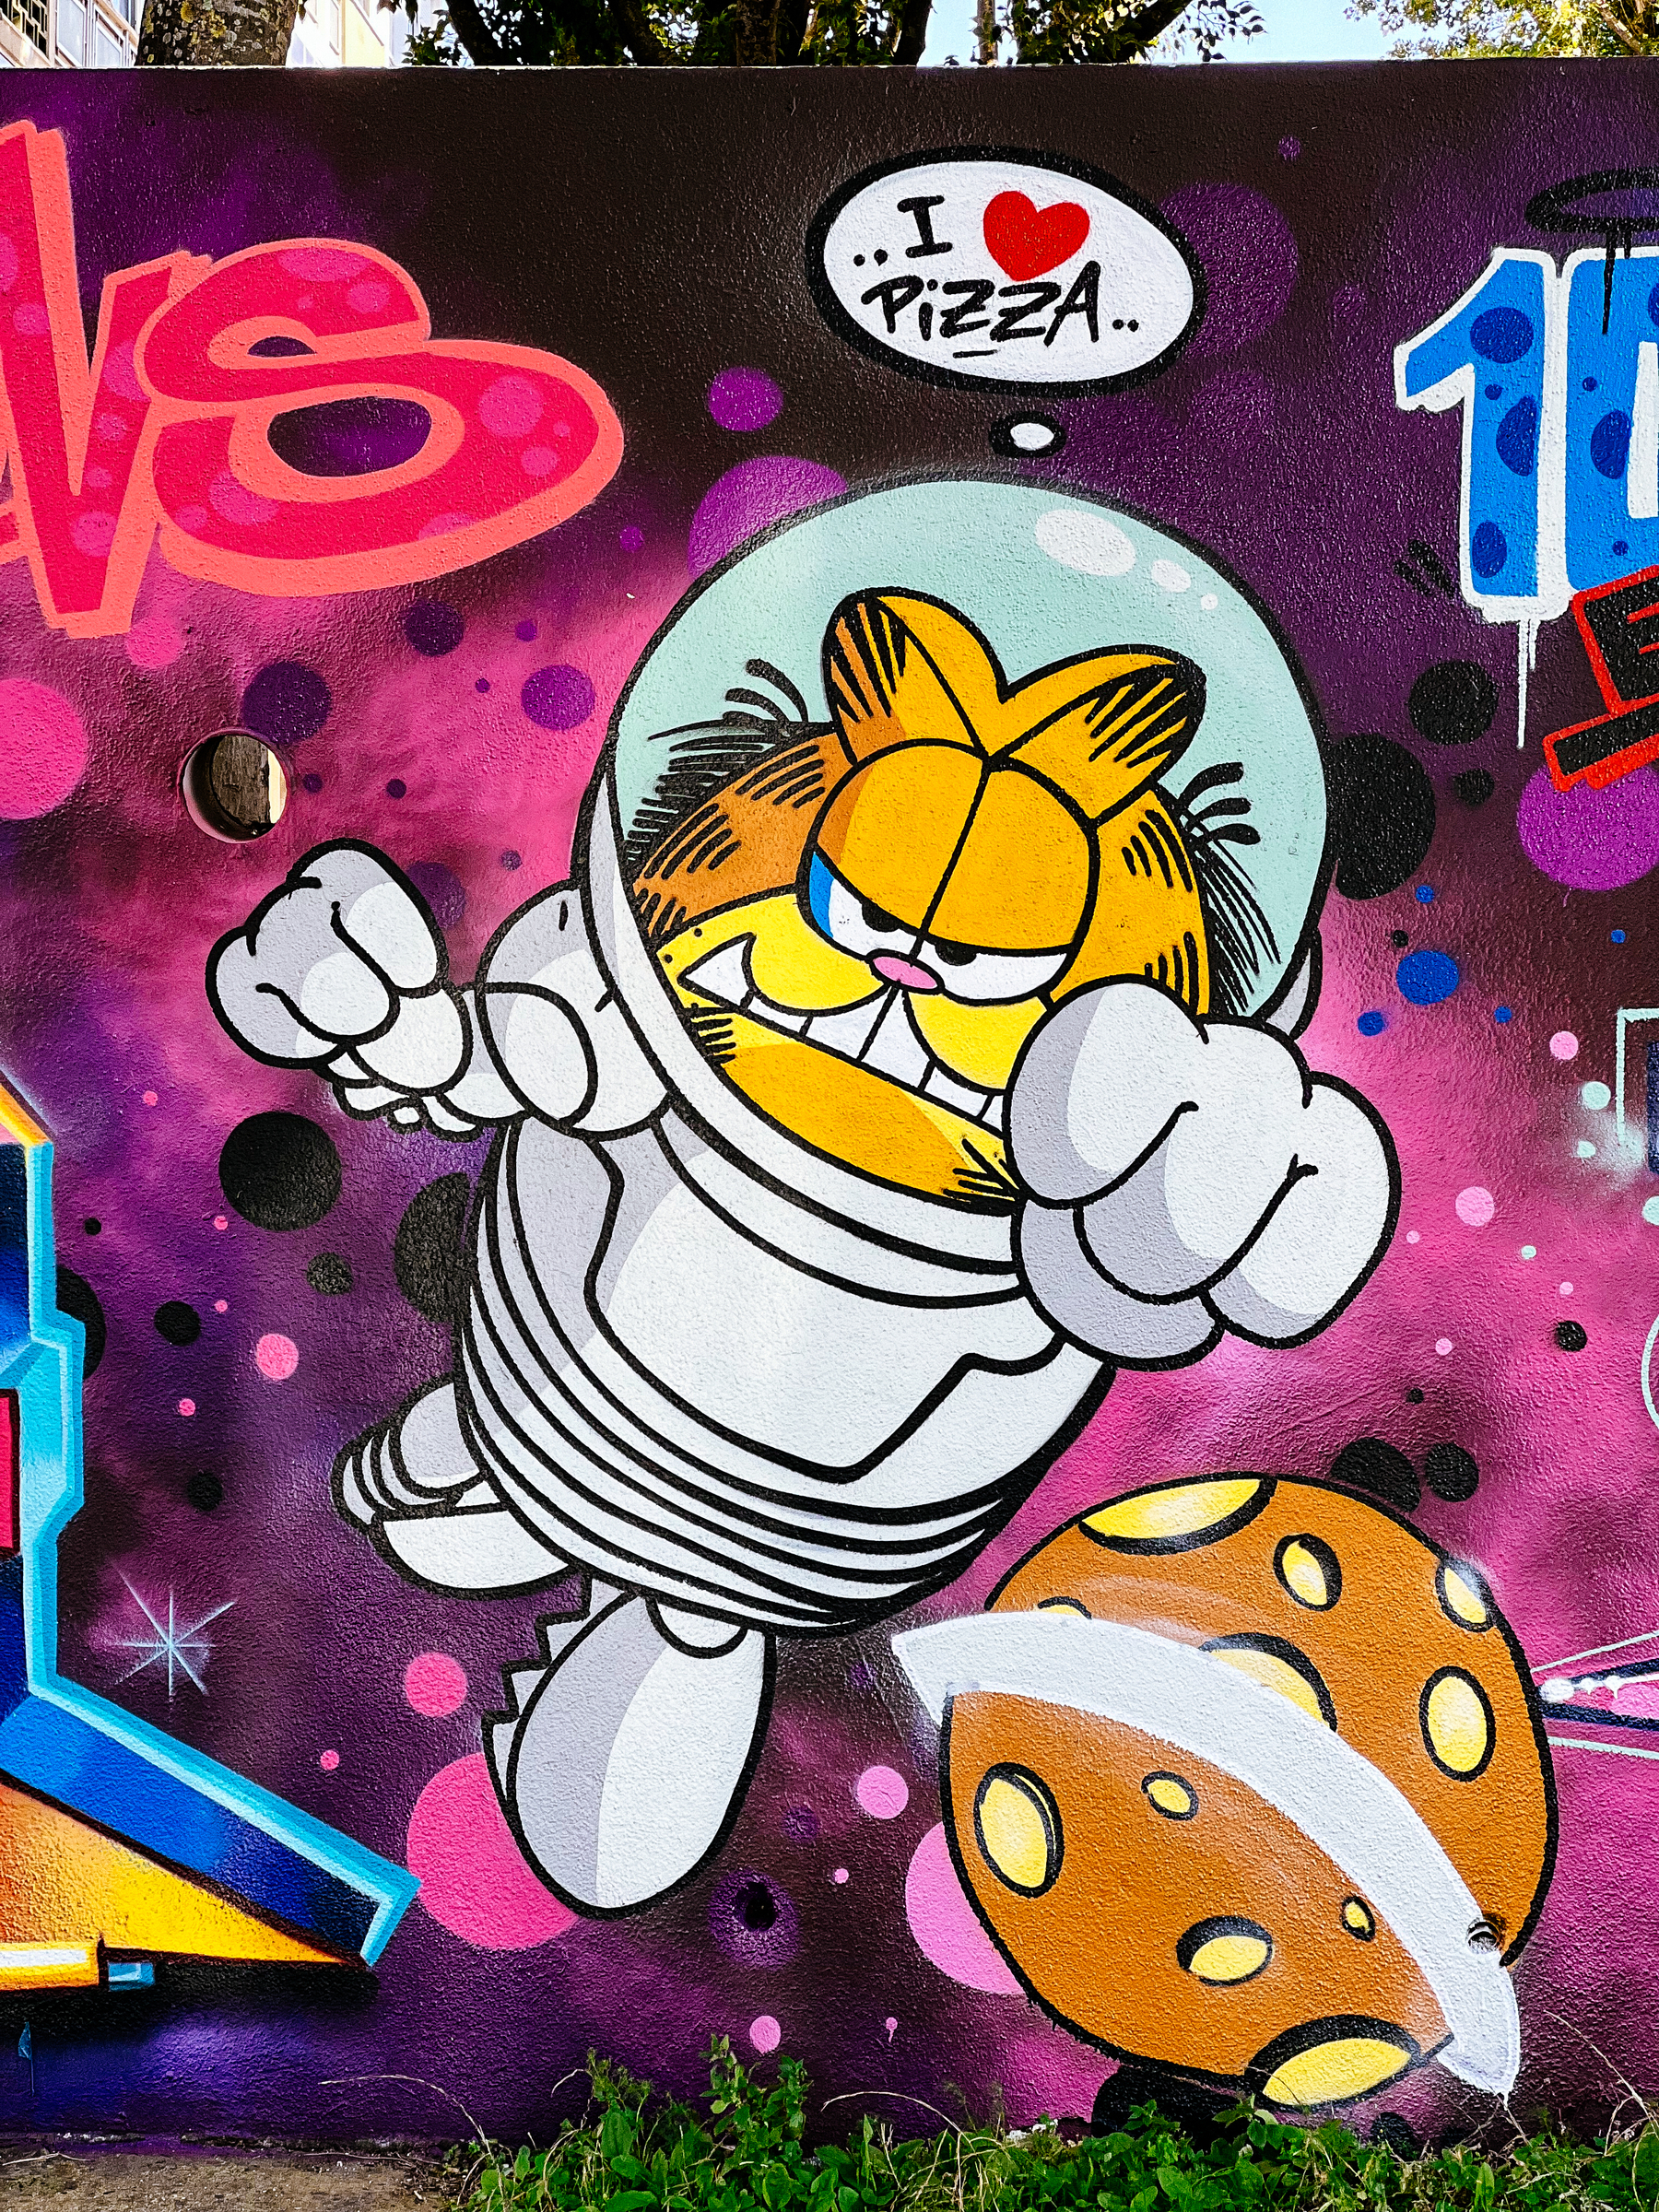 Garfield as an astronaut, saying “I heart pizza”. 